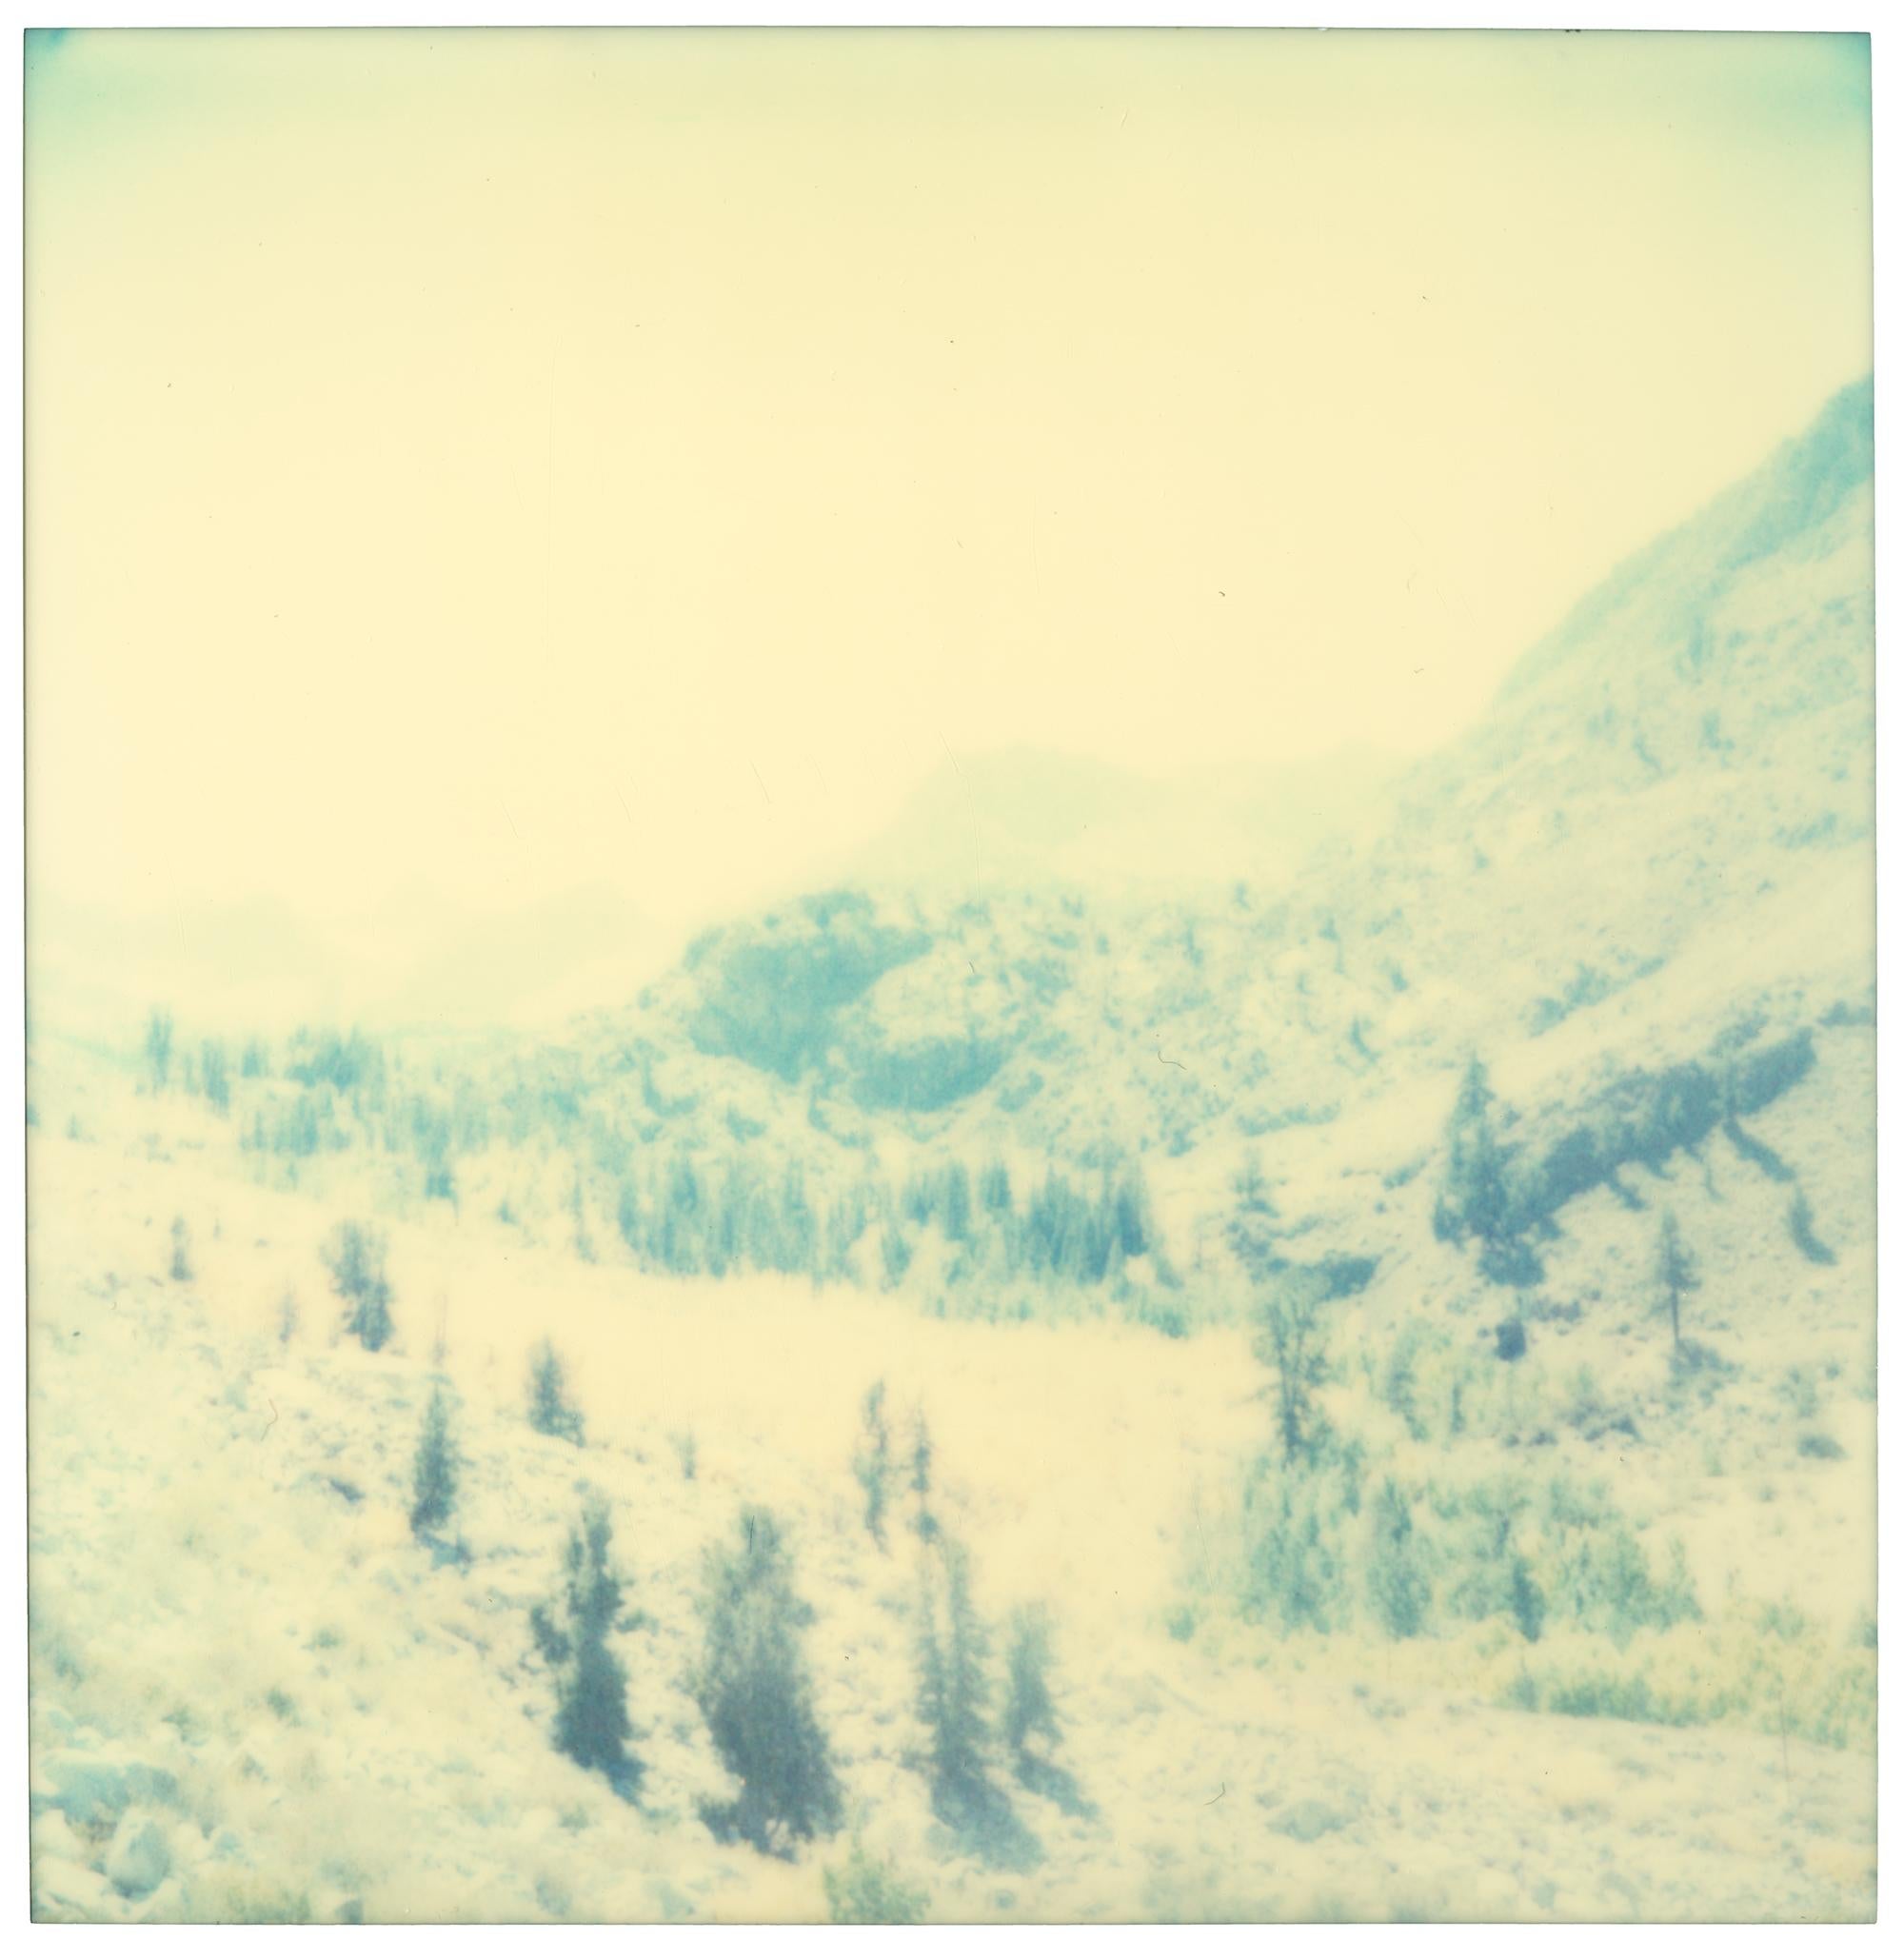 The Valley (Wastelands) - Polaroid, Contemporain, 21e siècle, Couleur, Paysage